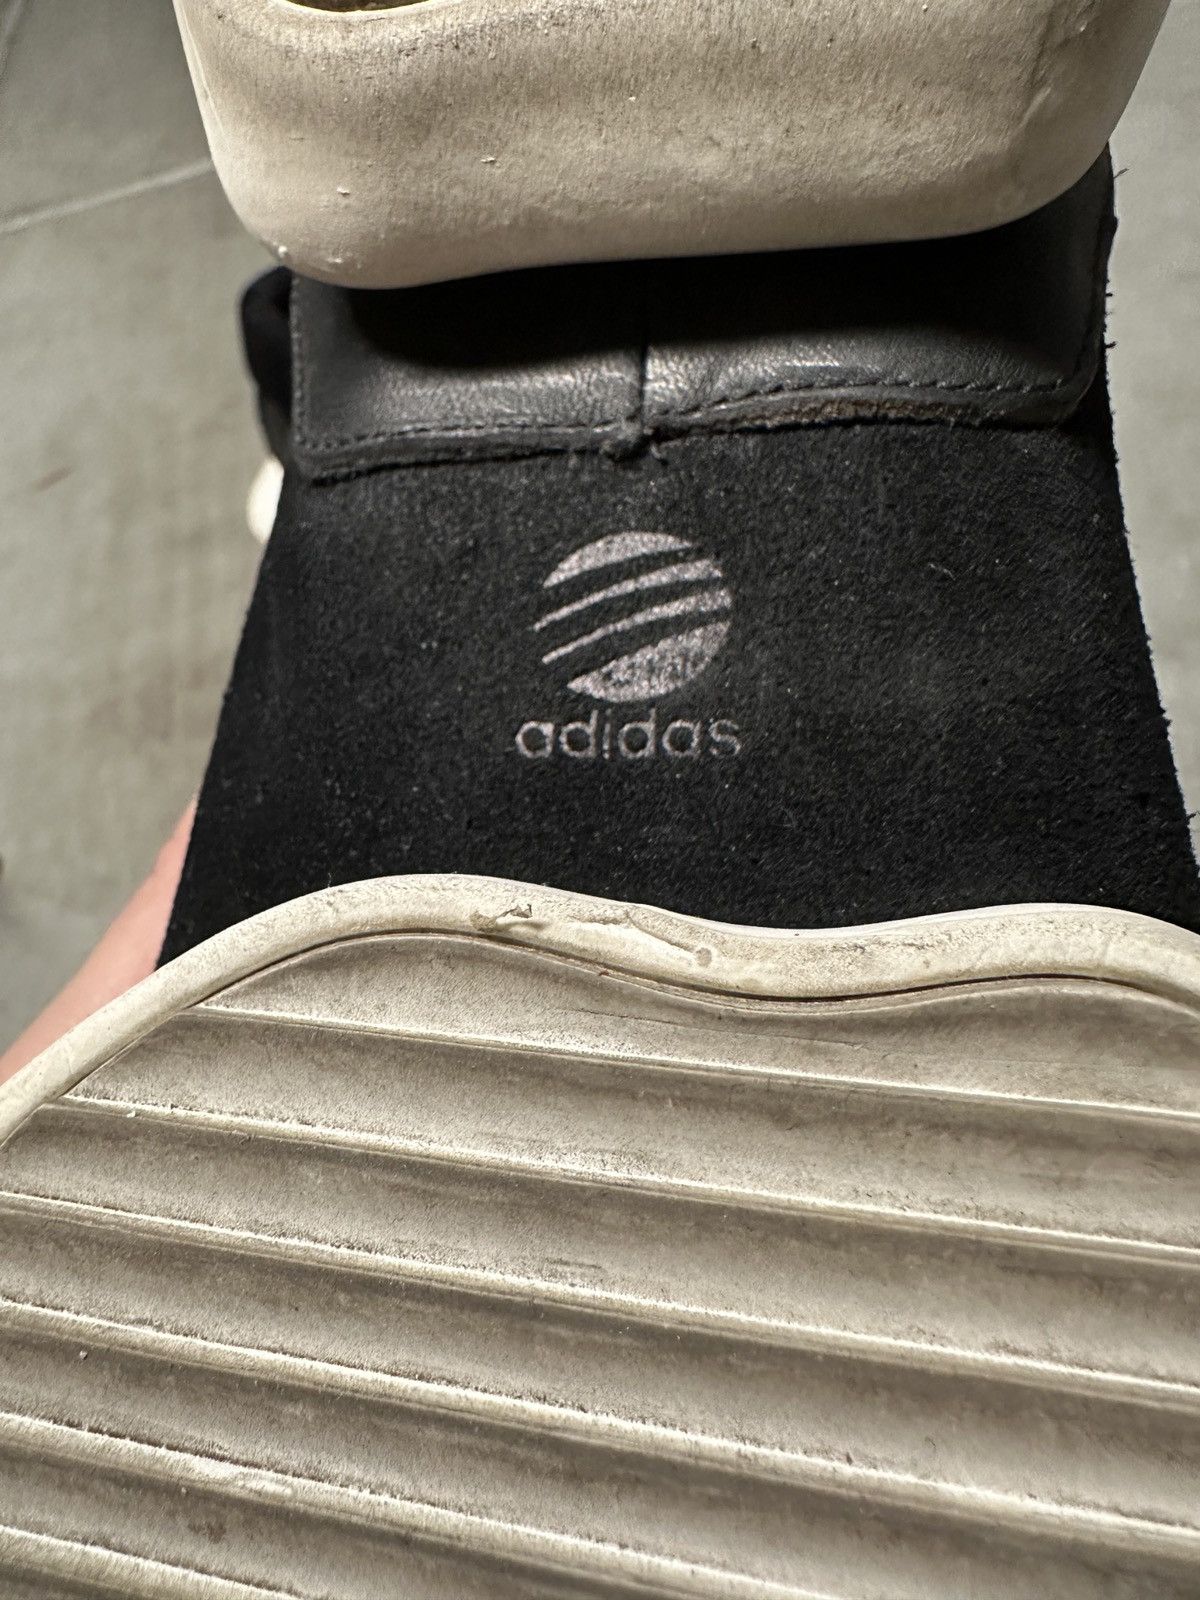 Adidas Rick Owens x Adidas Vicious Leather Tech Runner Runners Size US 10 / EU 43 - 6 Thumbnail